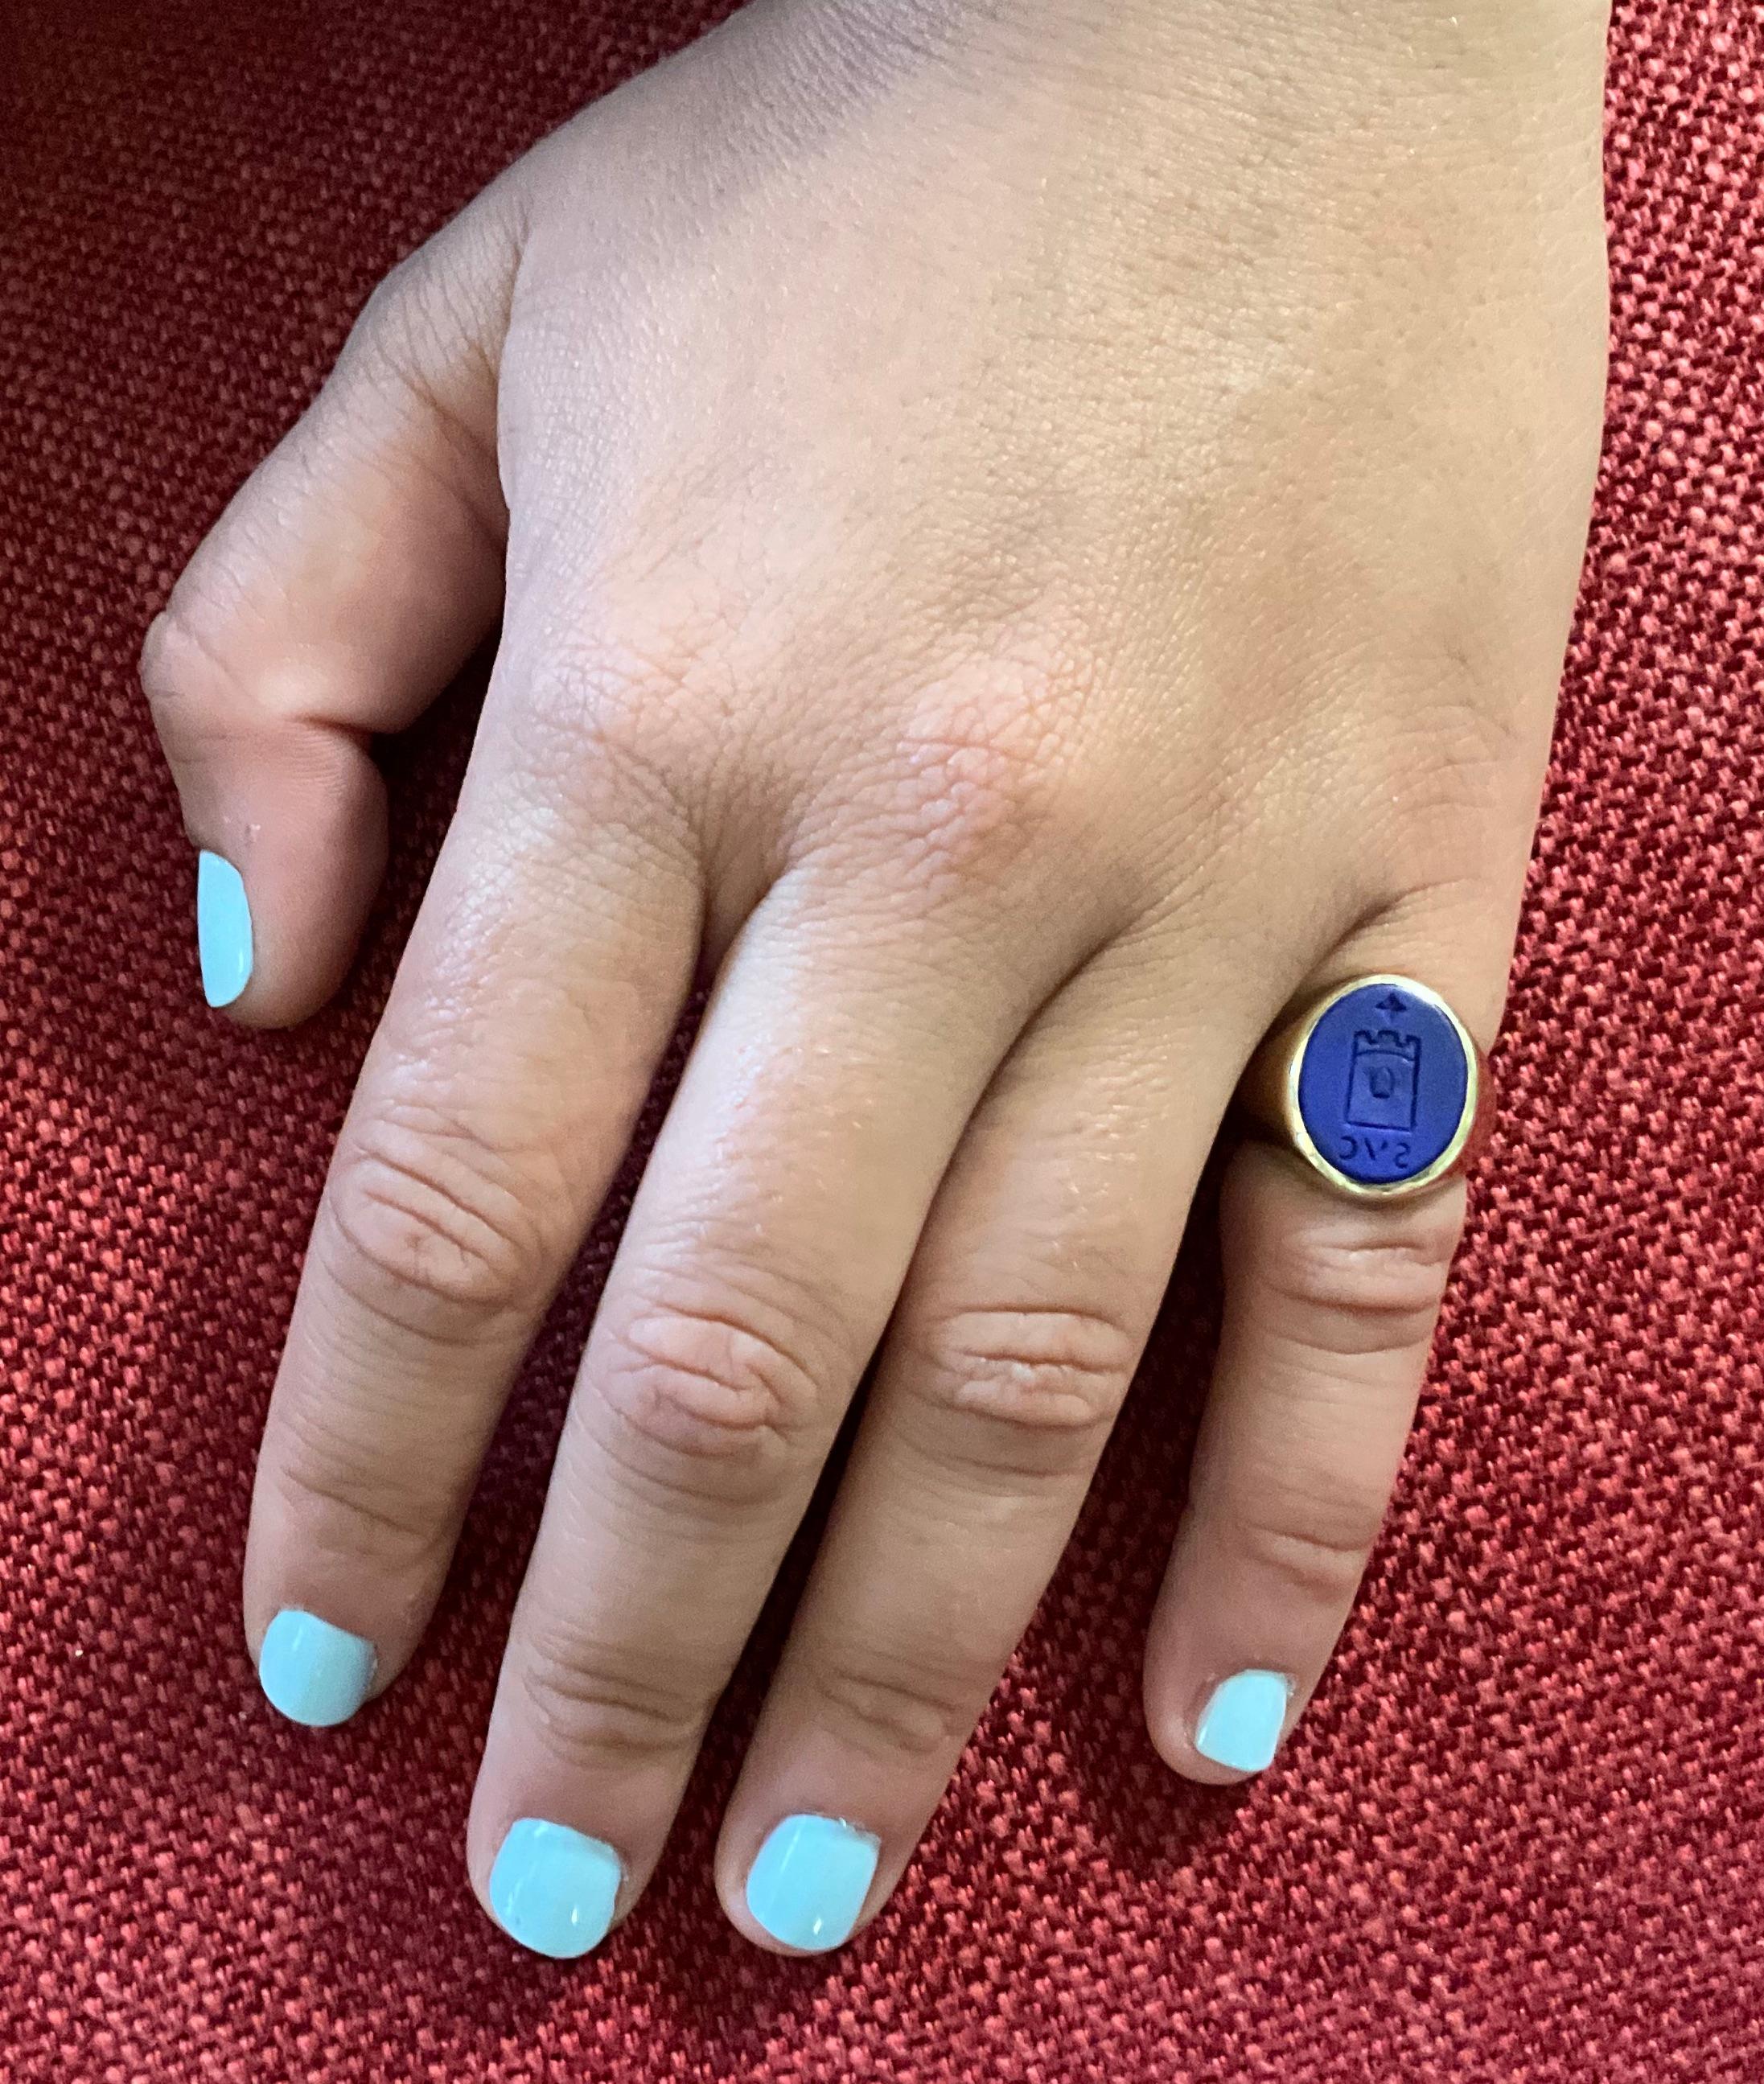 Twentieth Century  Lapis Lazuli Signet Ring engraved 